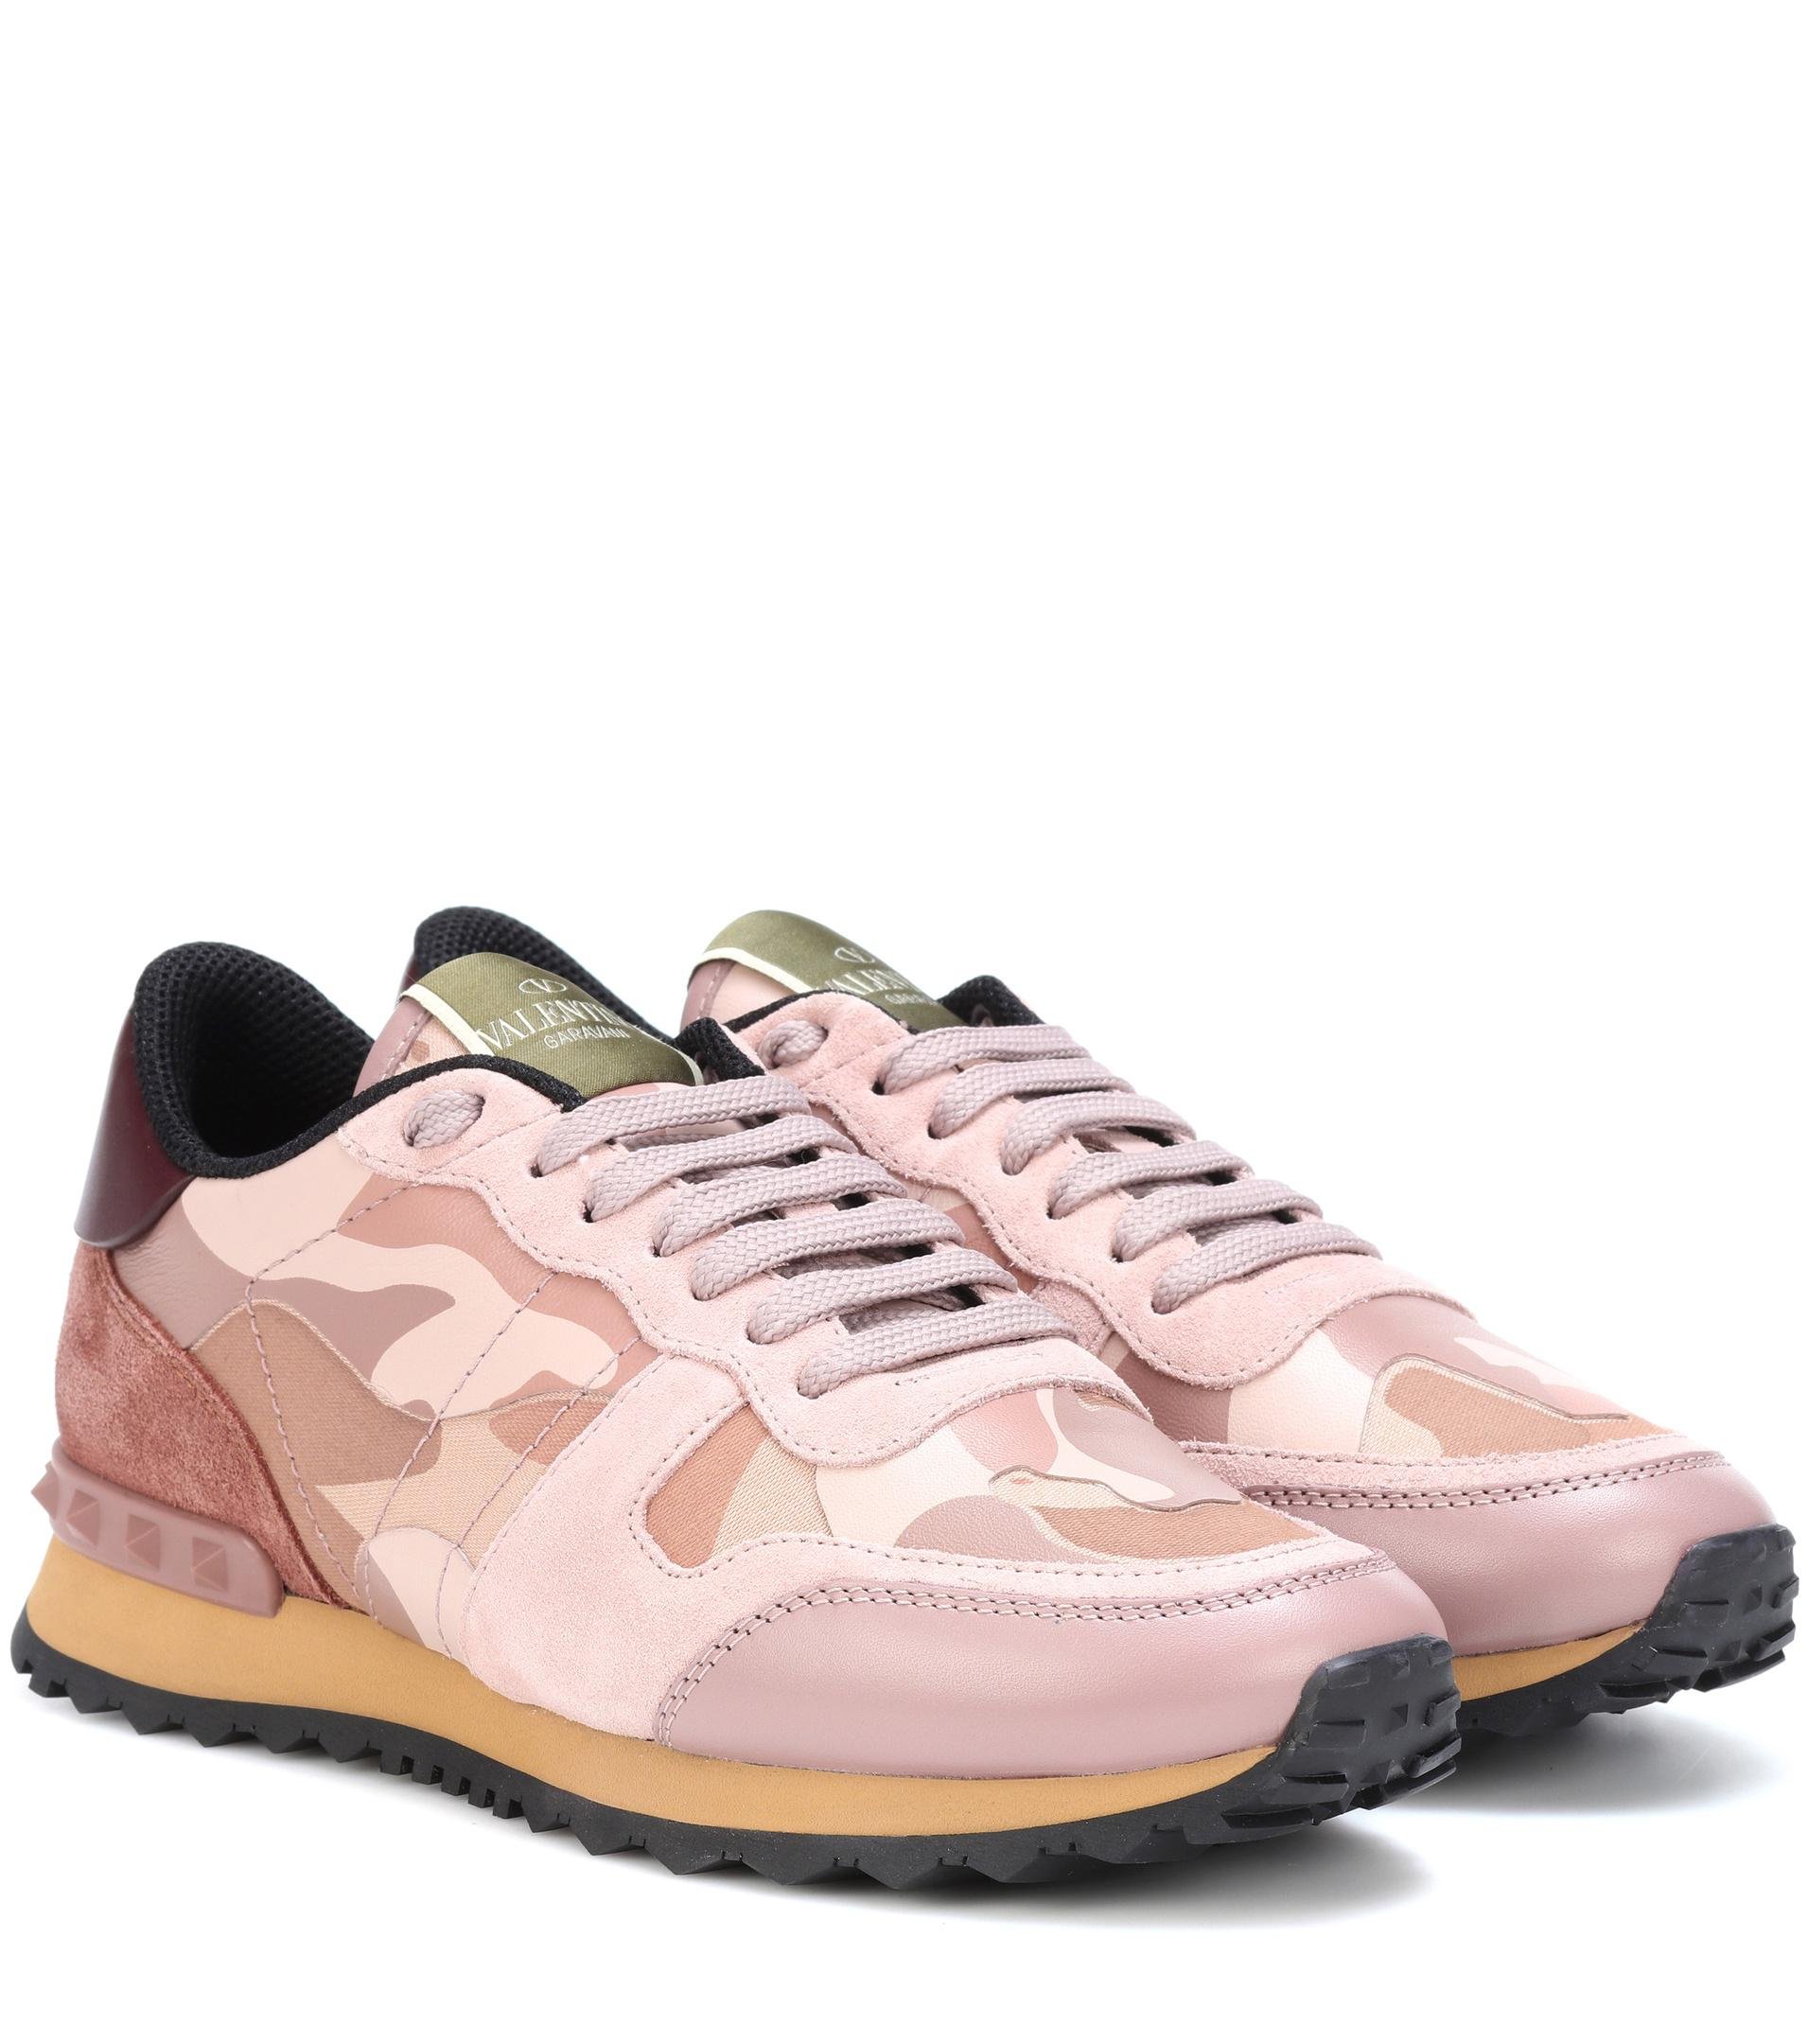 Valentino Garavani Suede Rockrunner Camouflage Sneakers in Pink - Lyst